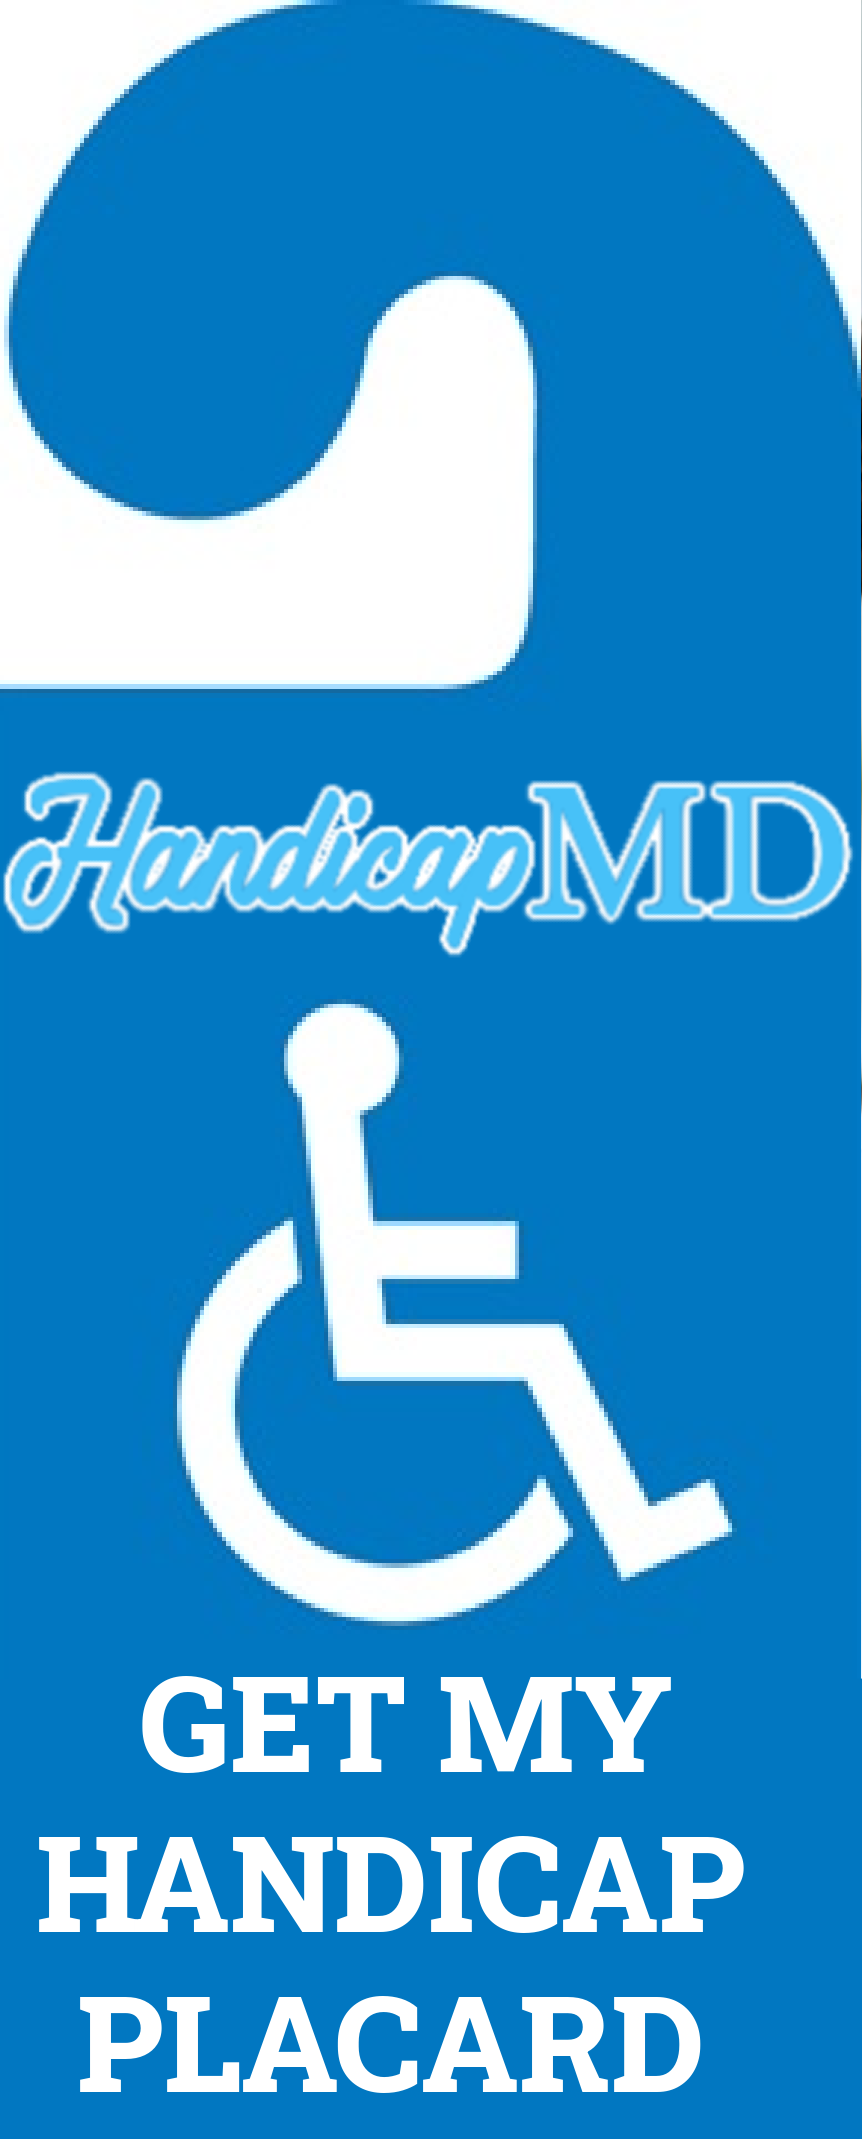 Online Guide to Handicap Parking in Oregon